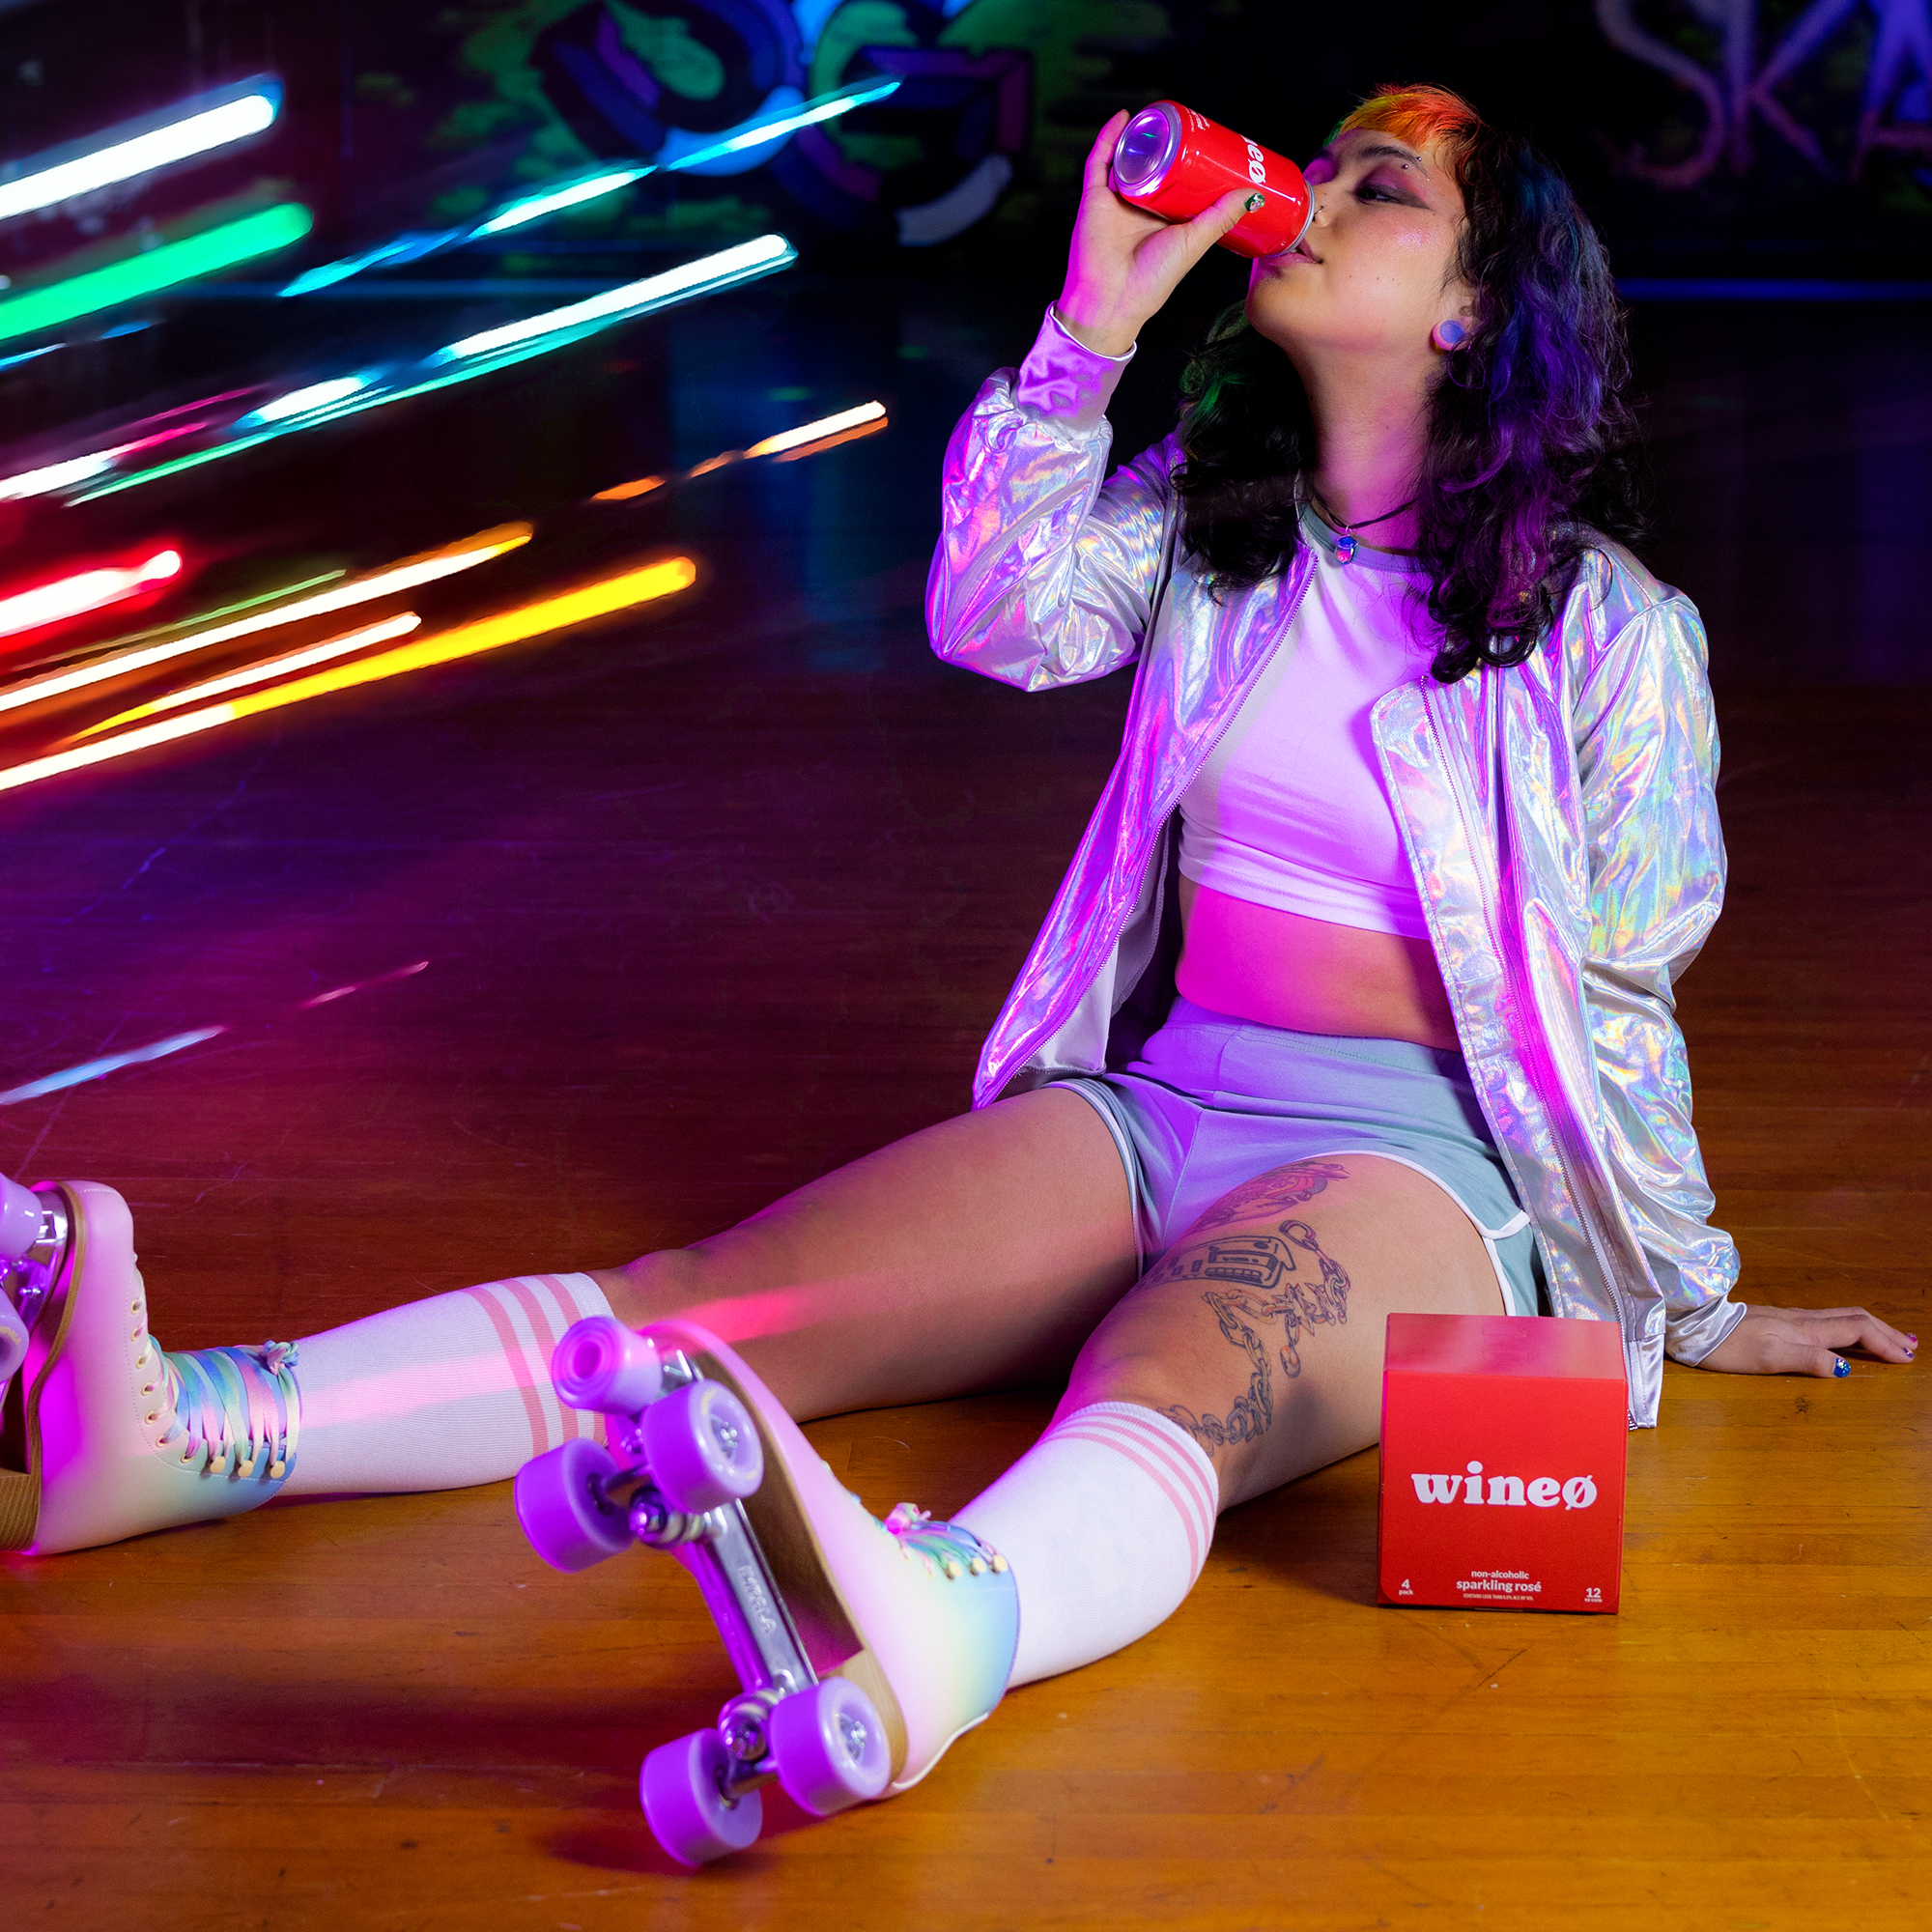 Wine0 Non-Alcoholic Sparkling Rosé Roller Skates